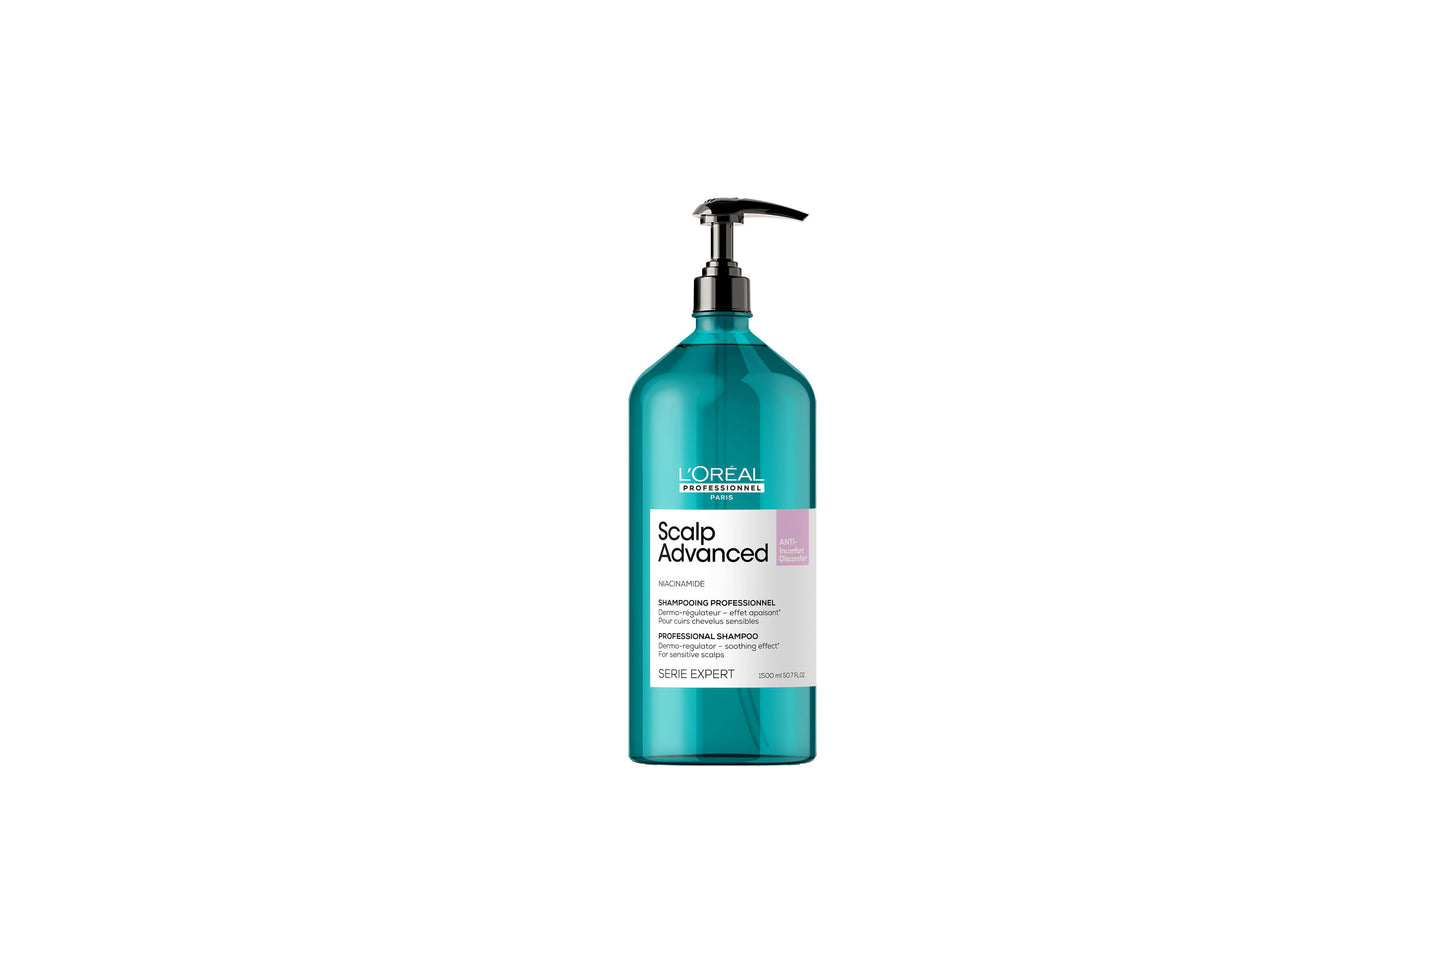 Scalp Advanced Anti-Discomfort Dermo Regulator Shampoo with Pump 1500ml